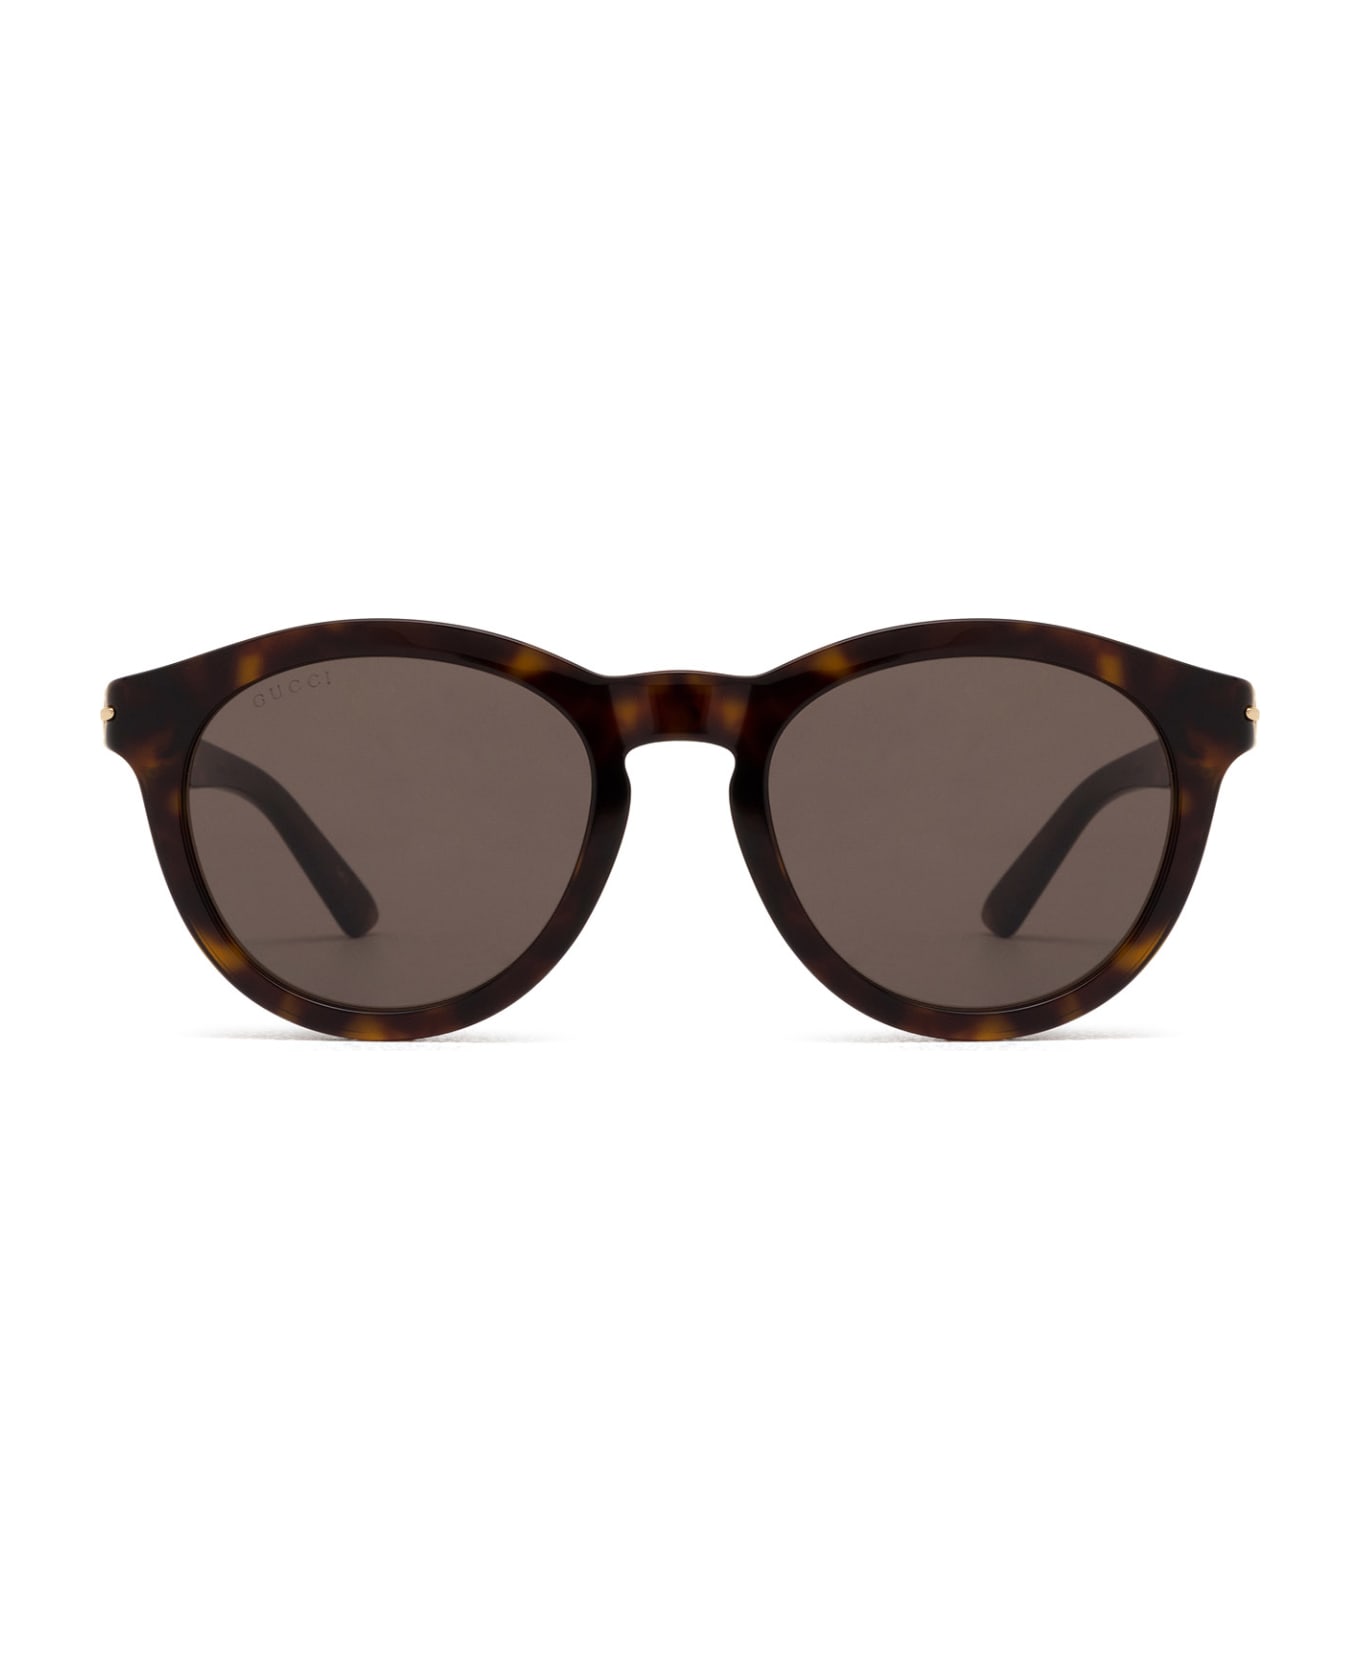 Gucci Eyewear Gg1501s Havana Sunglasses - Havana